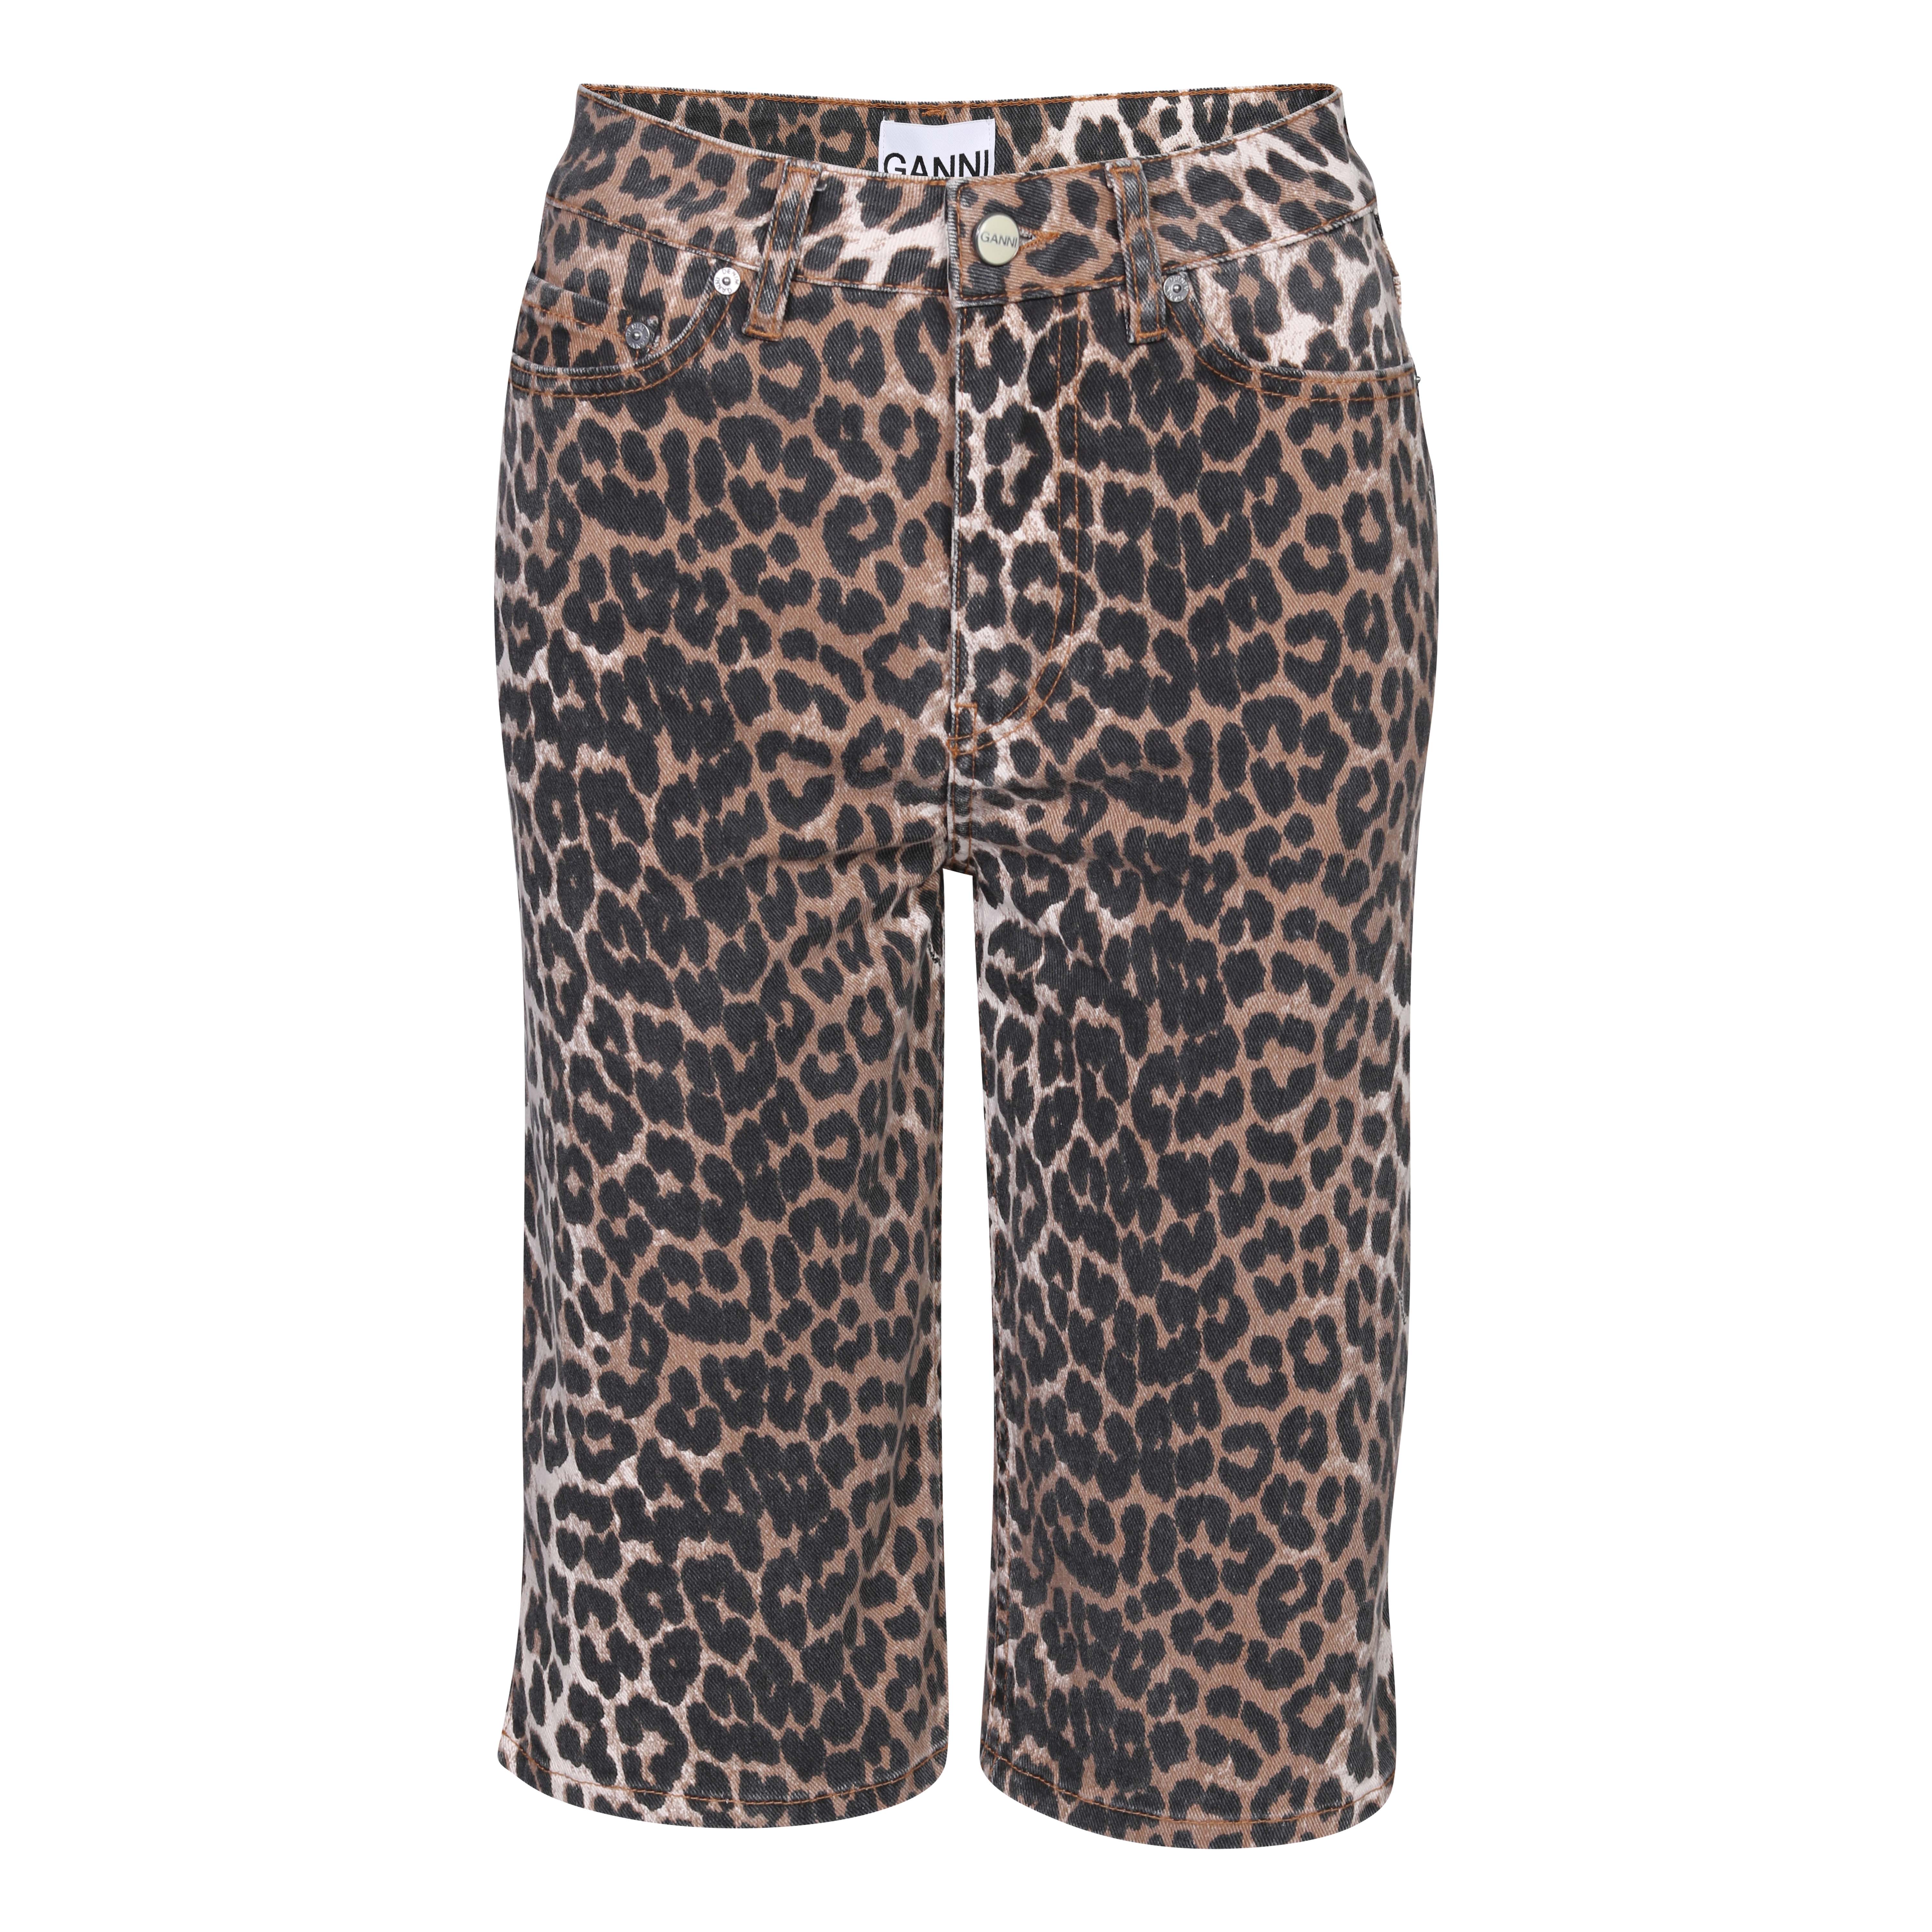 Ganni Knee Length Denim Shorts in Leopard 28